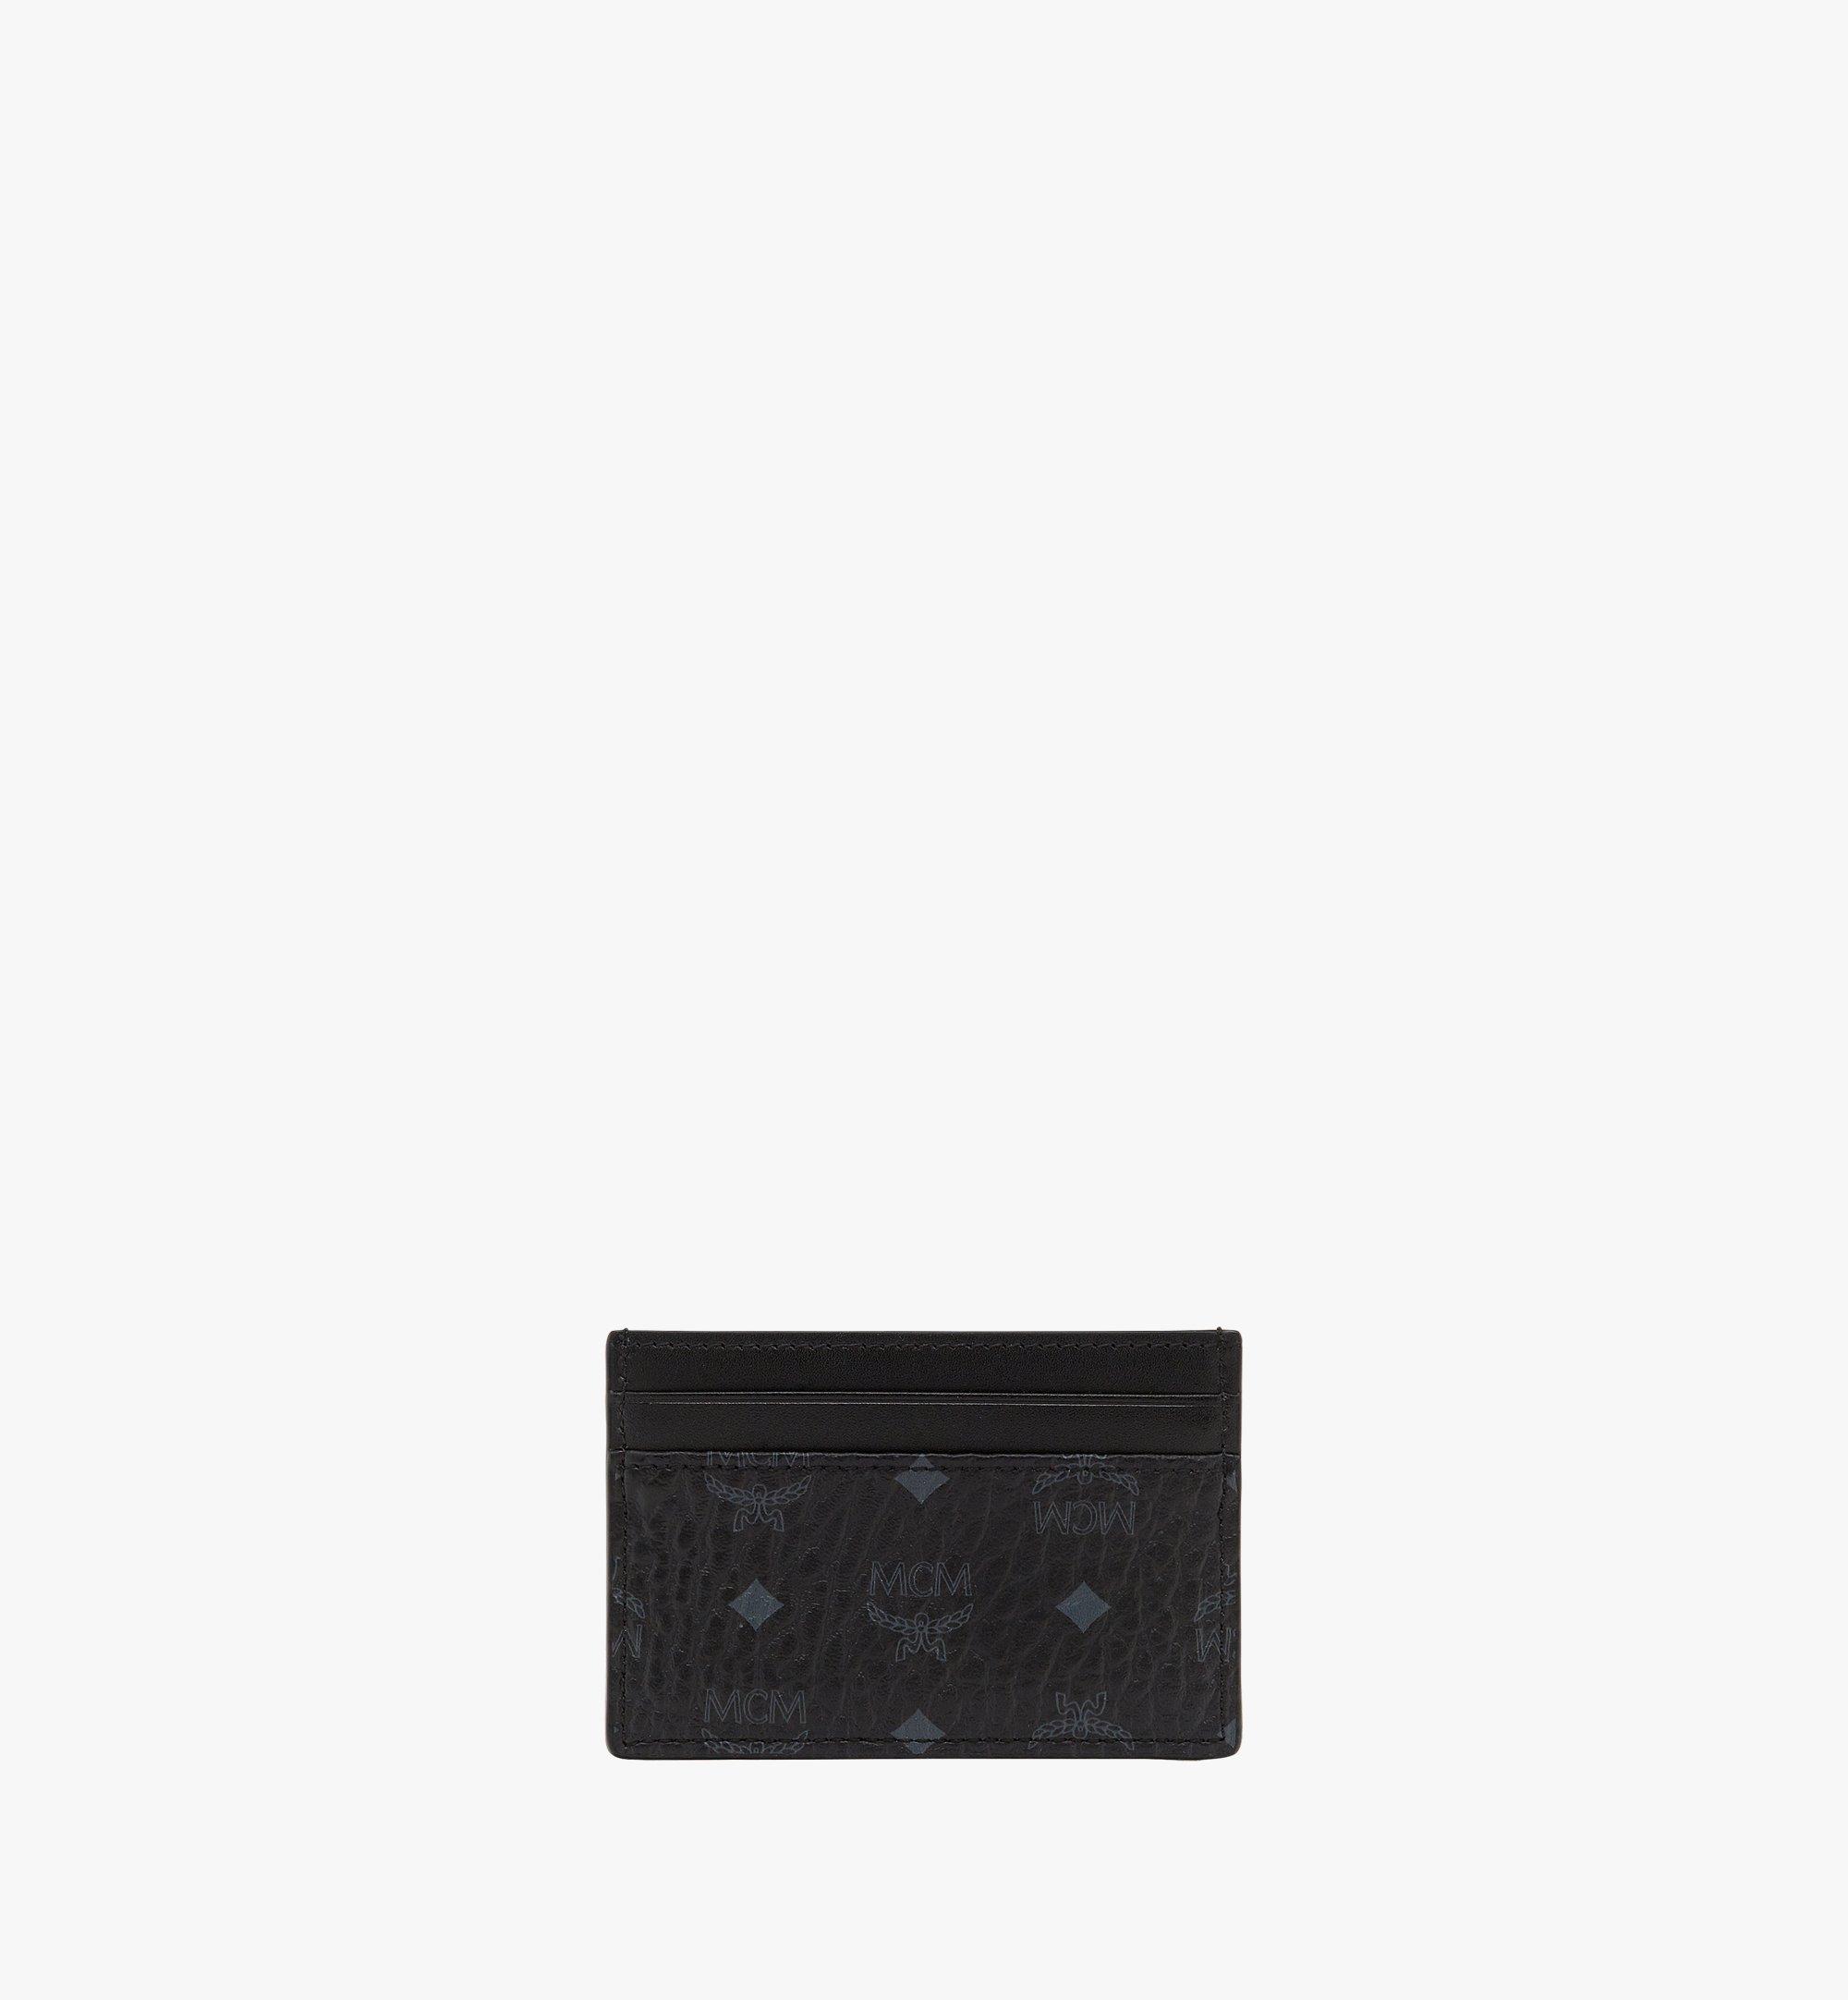 Zuri Card Pouch - Black